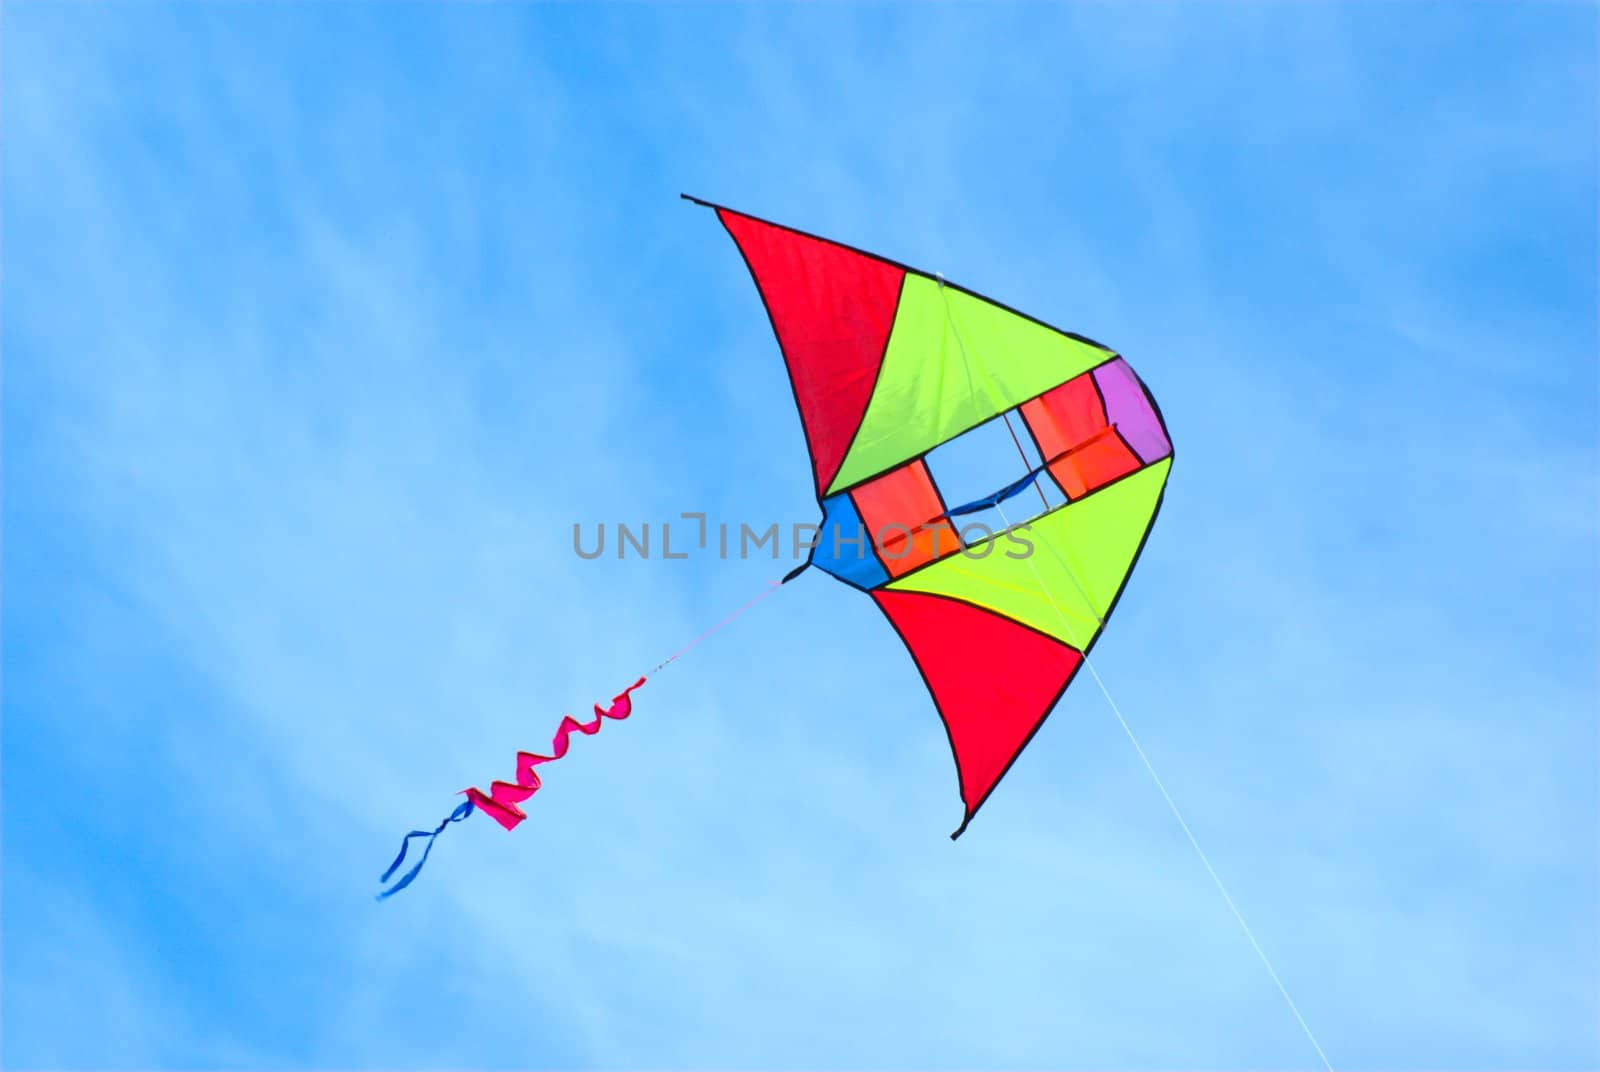 Kite flying in the sky by Light